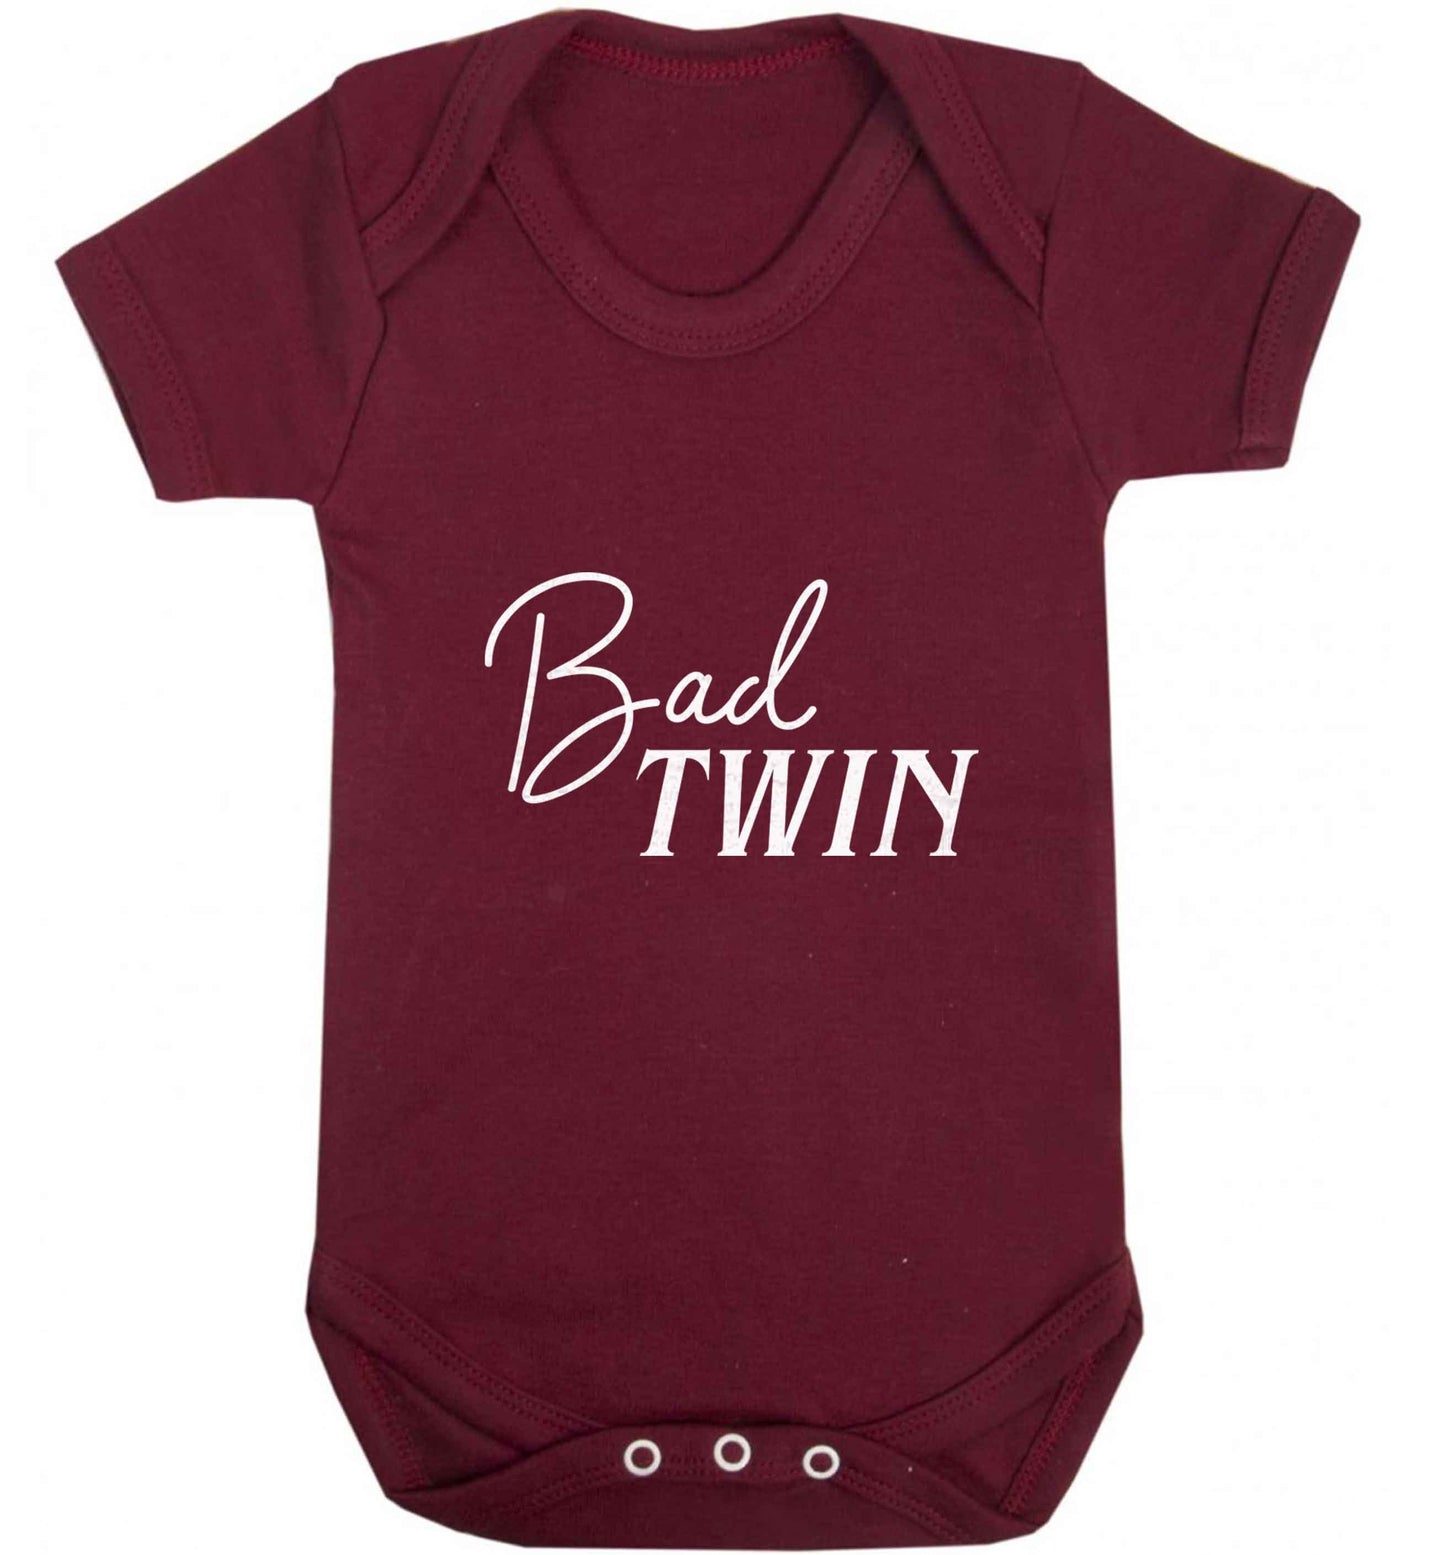 Bad twin baby vest maroon 18-24 months